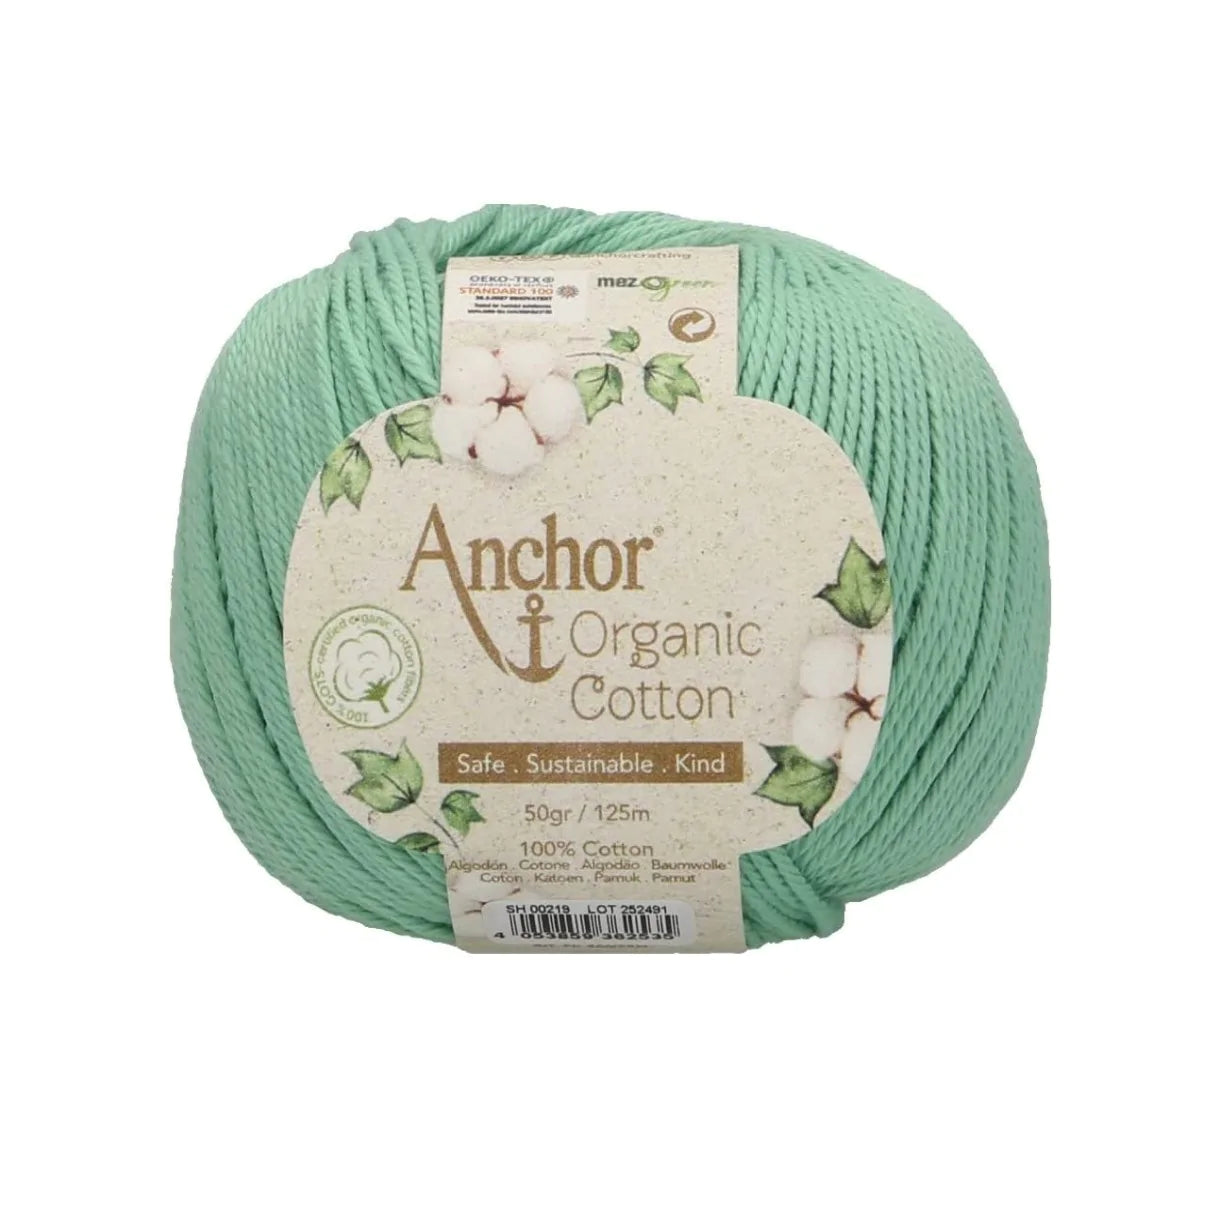 Anchor - Organic Cotton - 50g Ball - Forest River Green